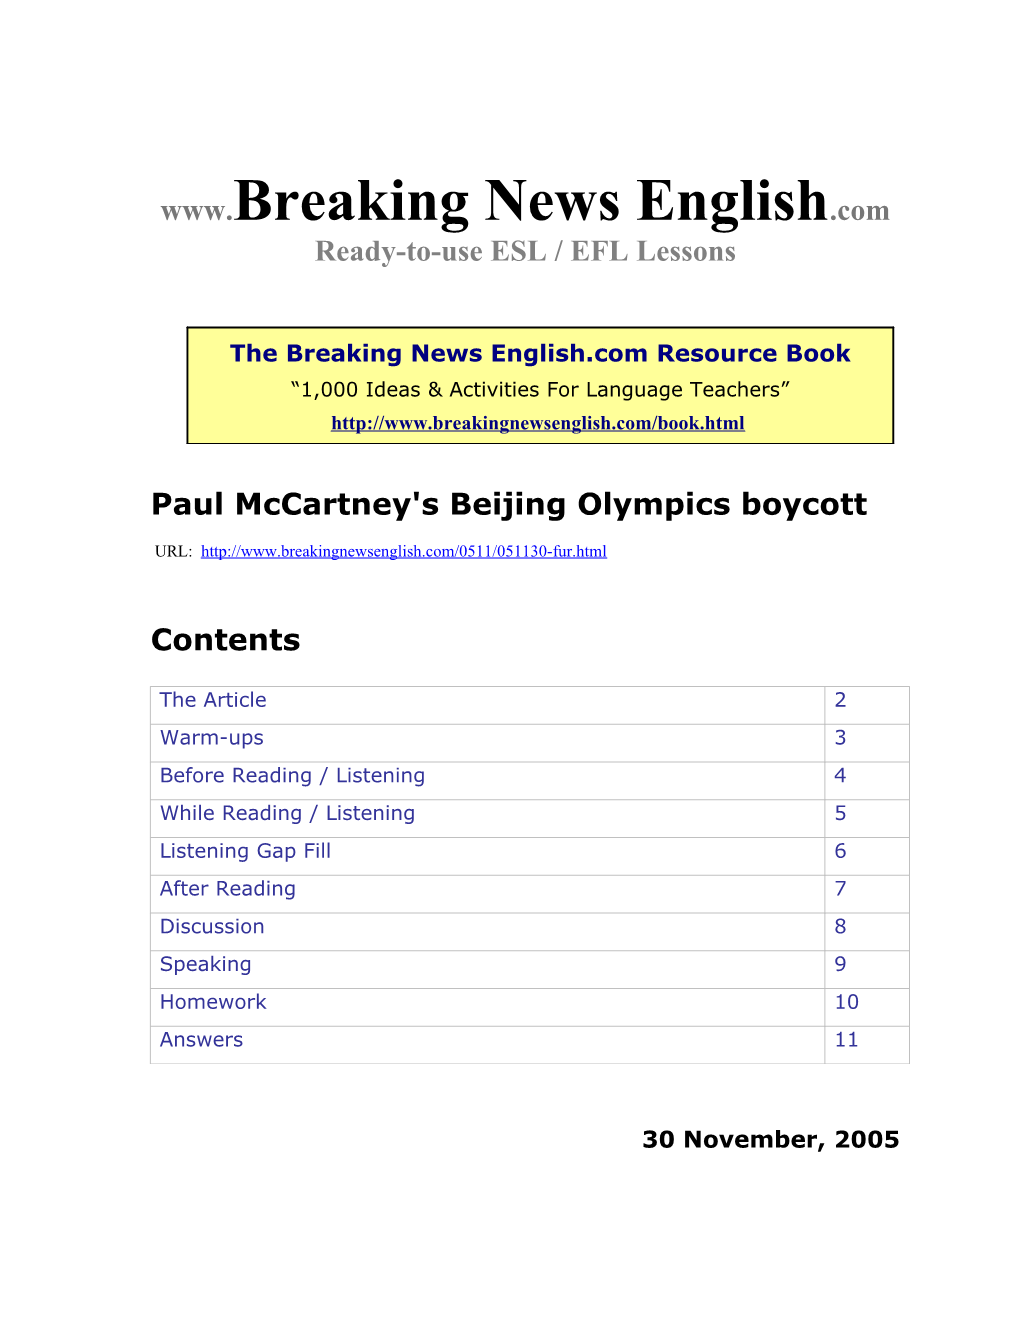 Paul Mccartney's Beijing Olympics Boycott